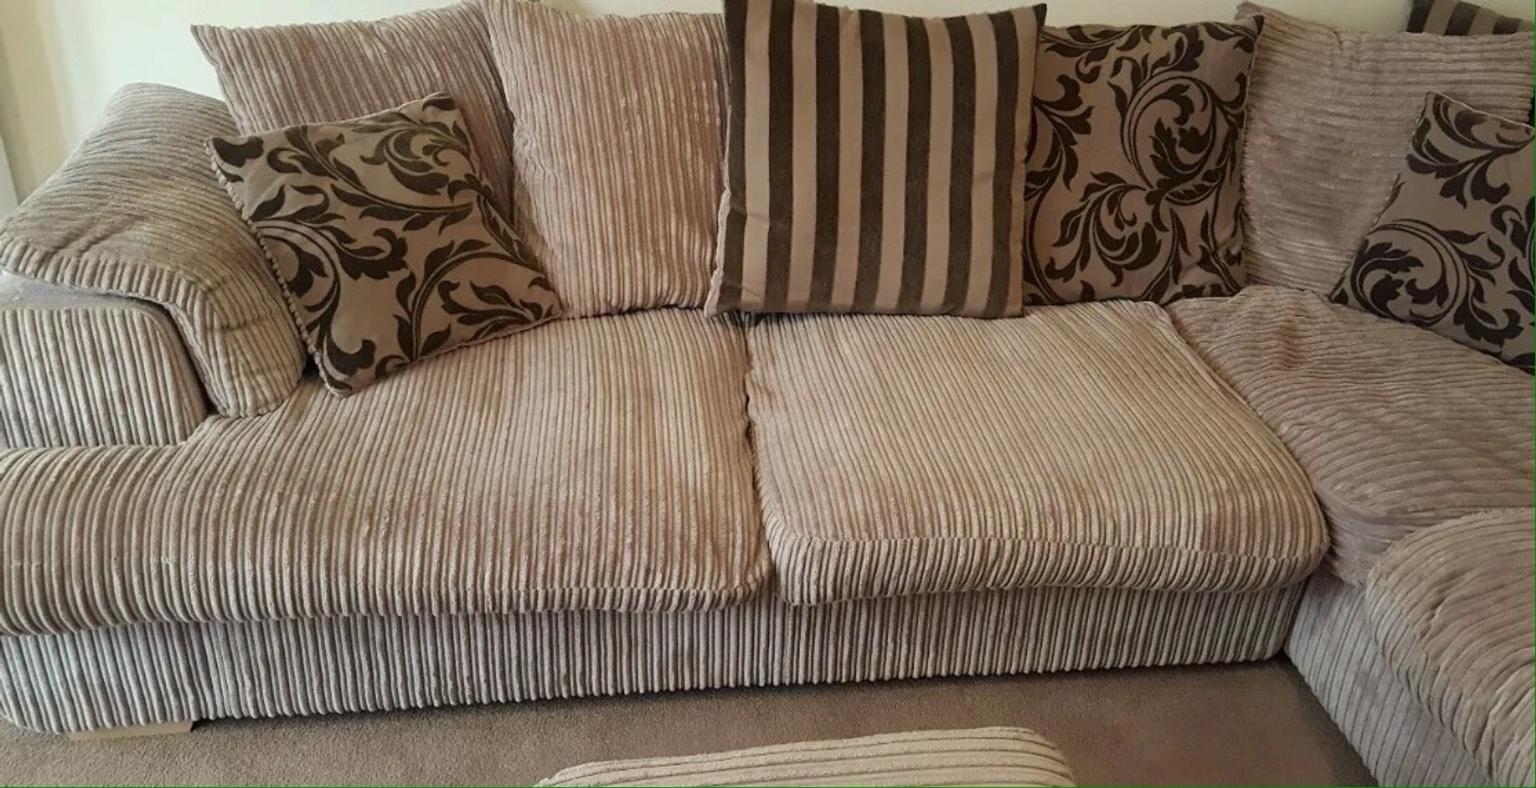 Dfs Jumbo Cord Corner Sofa In Nr2, Large Cord Sofa Cushions